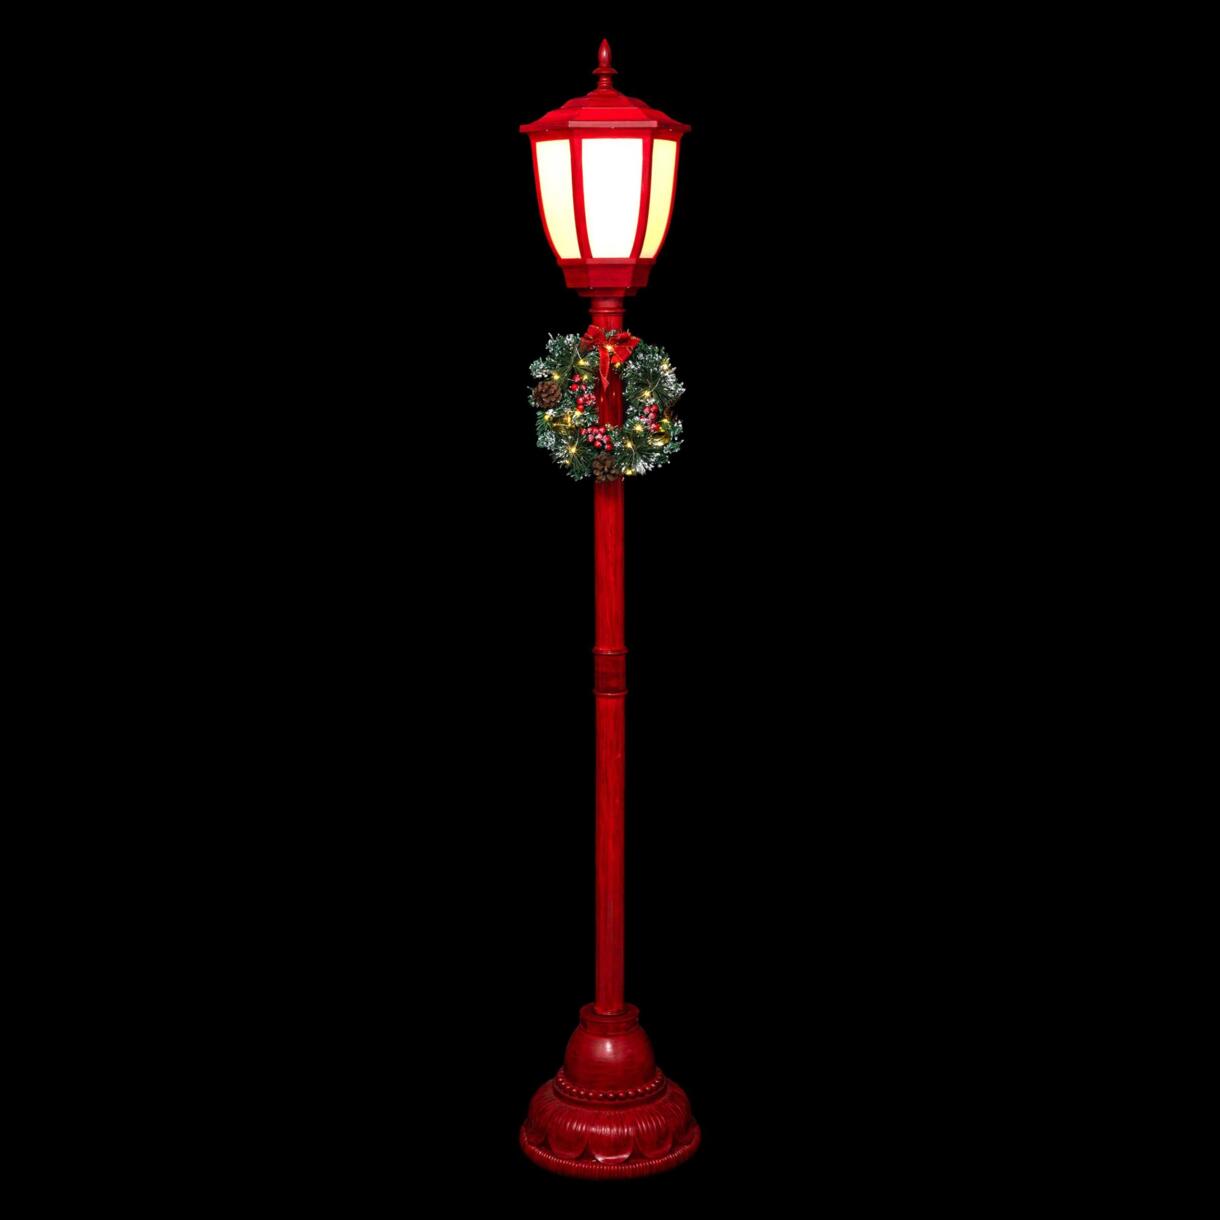 Lampadario illuminato  1 lanterna Rosso/bianco caldo